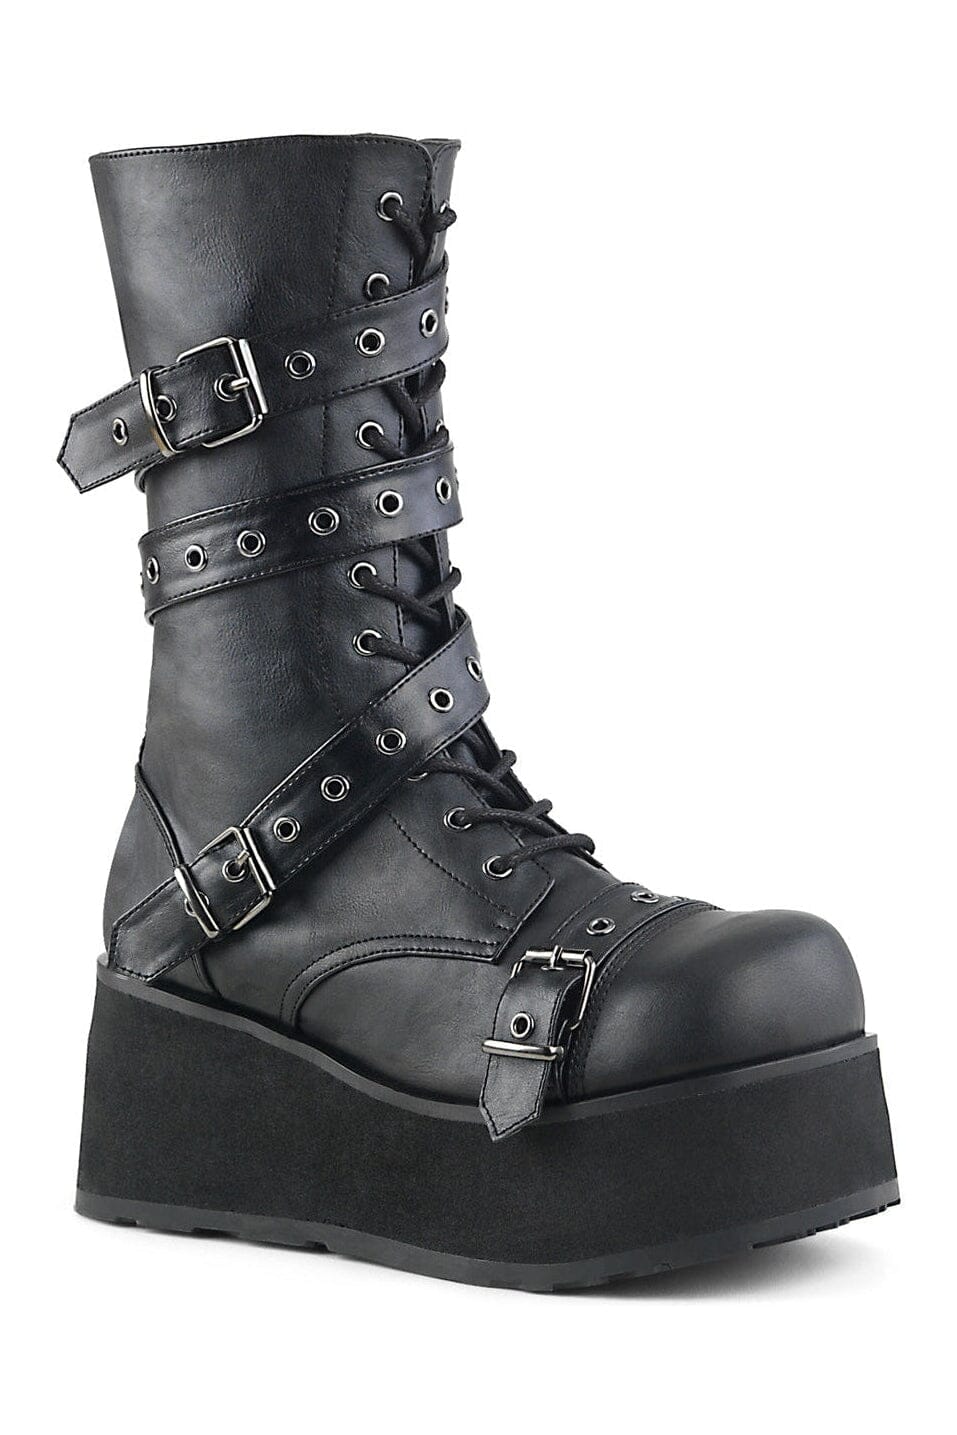 TRASHVILLE-205 Black Vegan Leather Knee Boot-Knee Boots-Demonia-Black-10-Vegan Leather-SEXYSHOES.COM